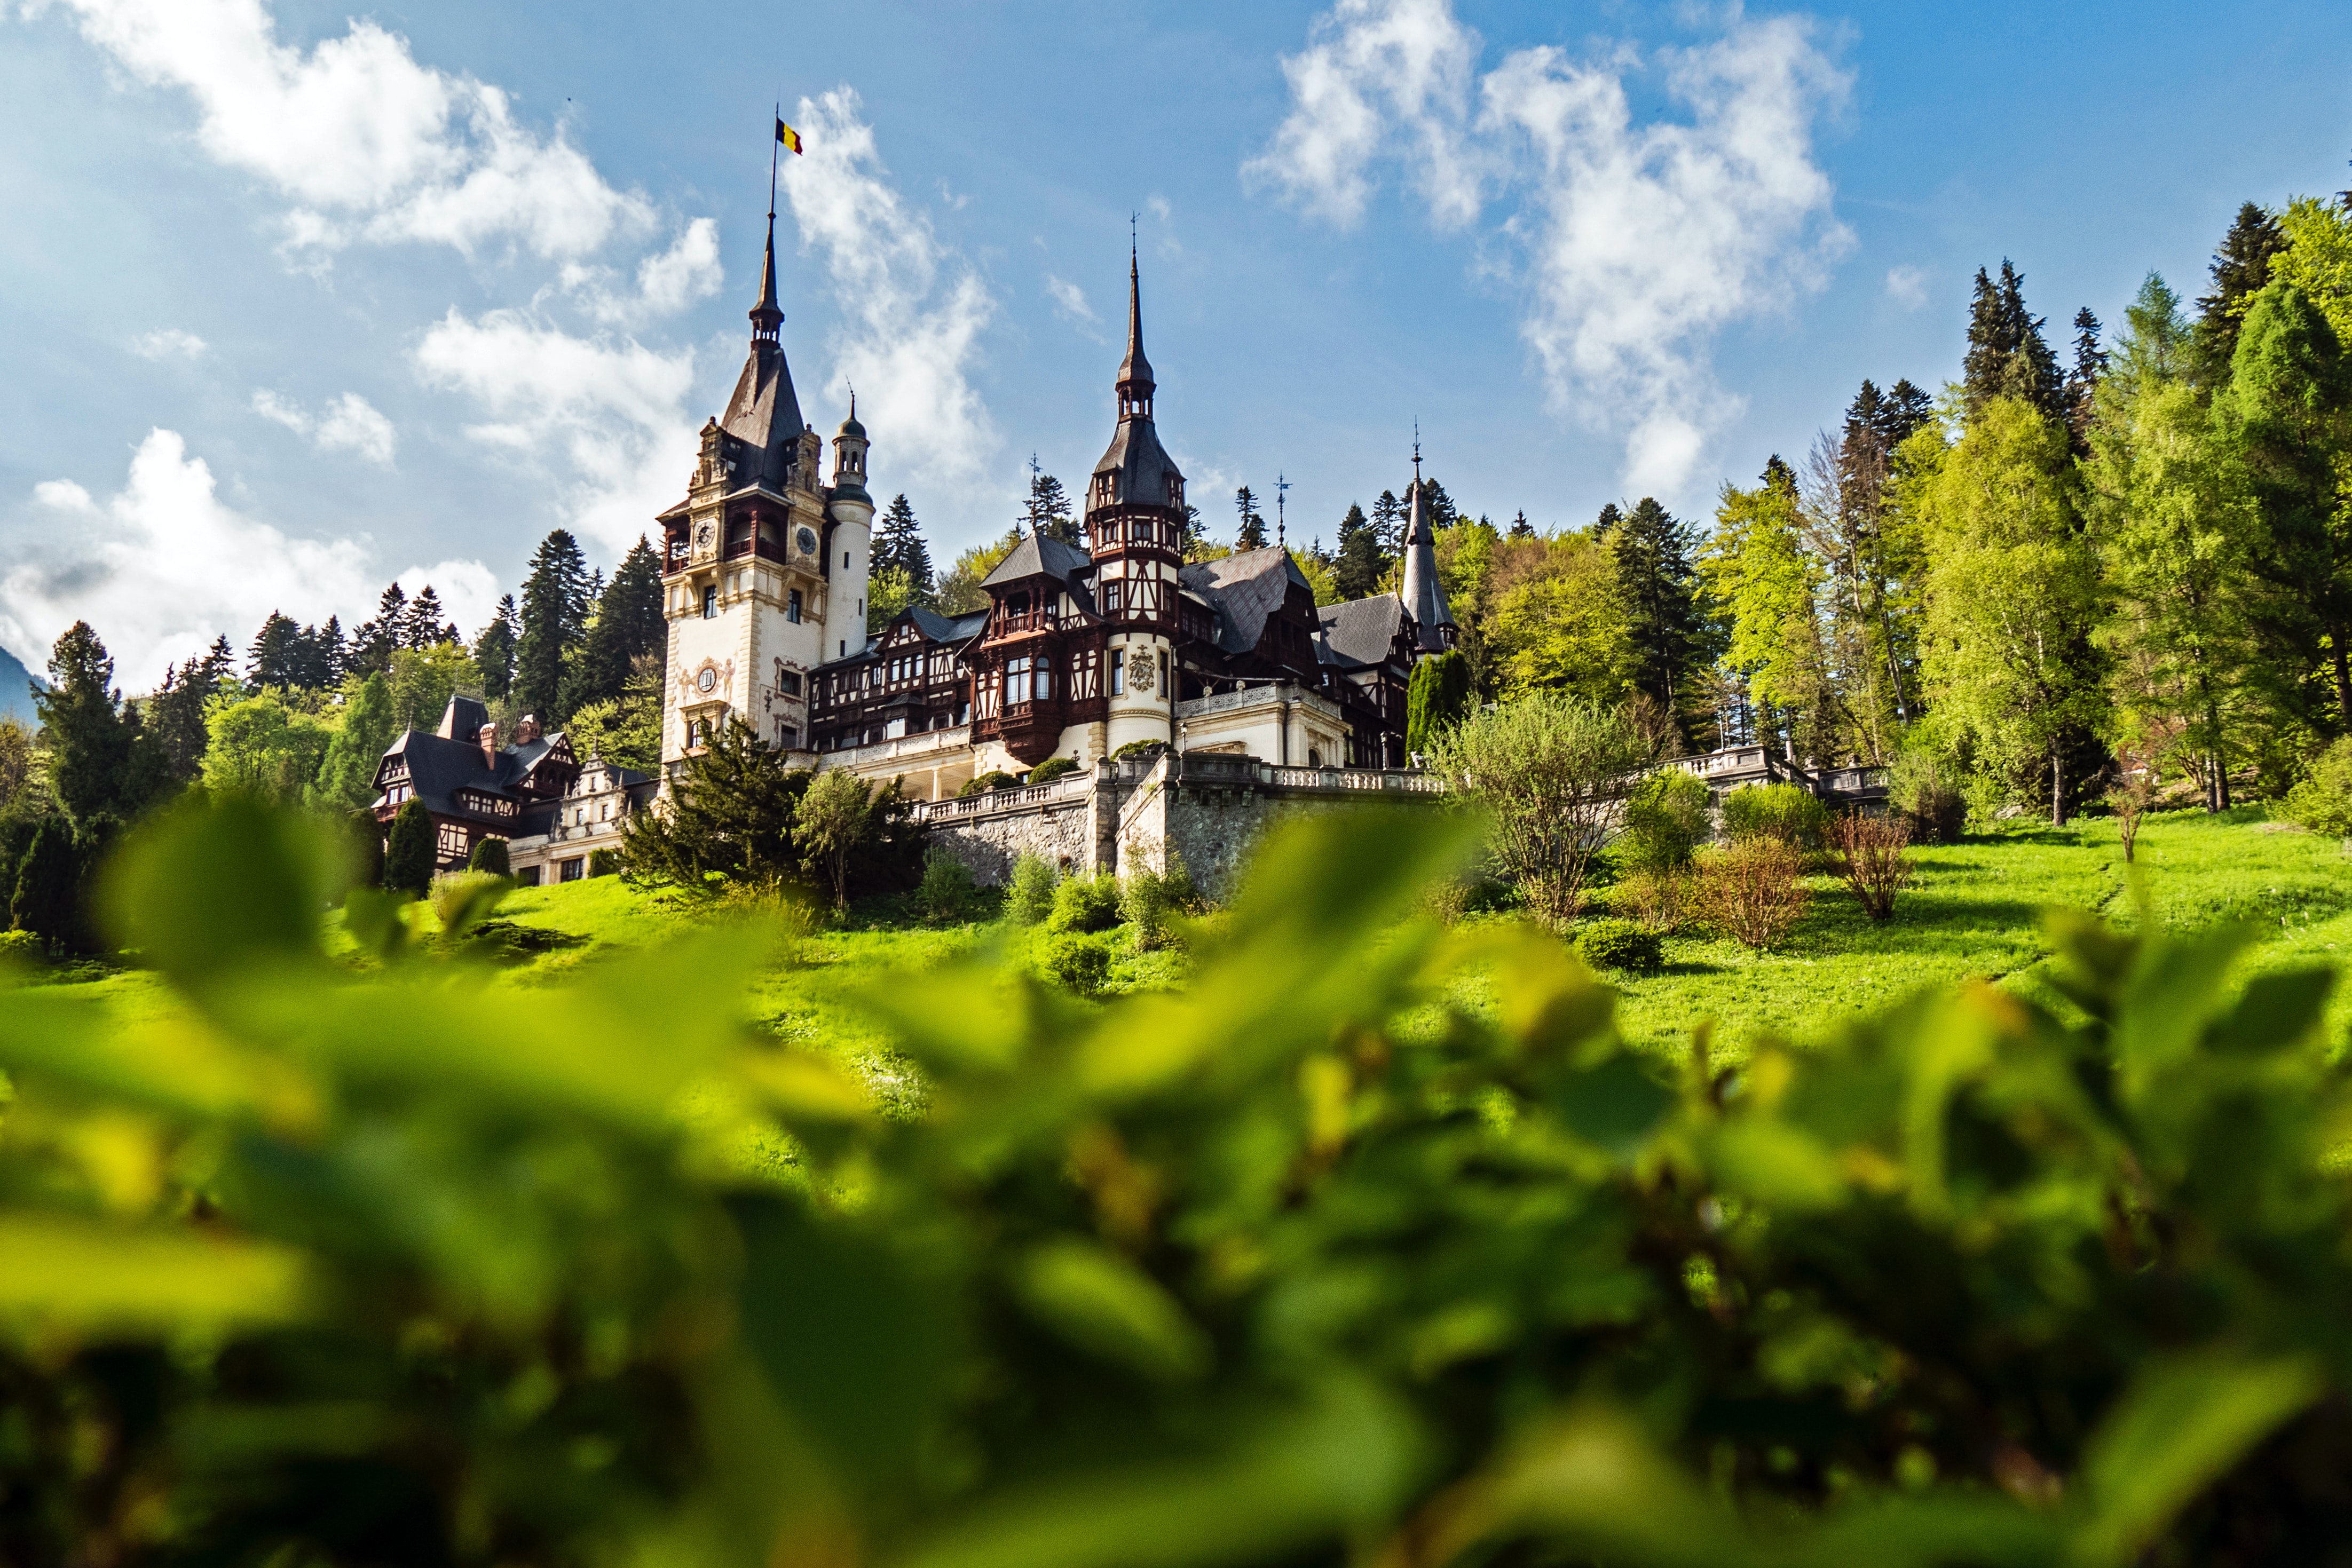 Peles castle in Romania.